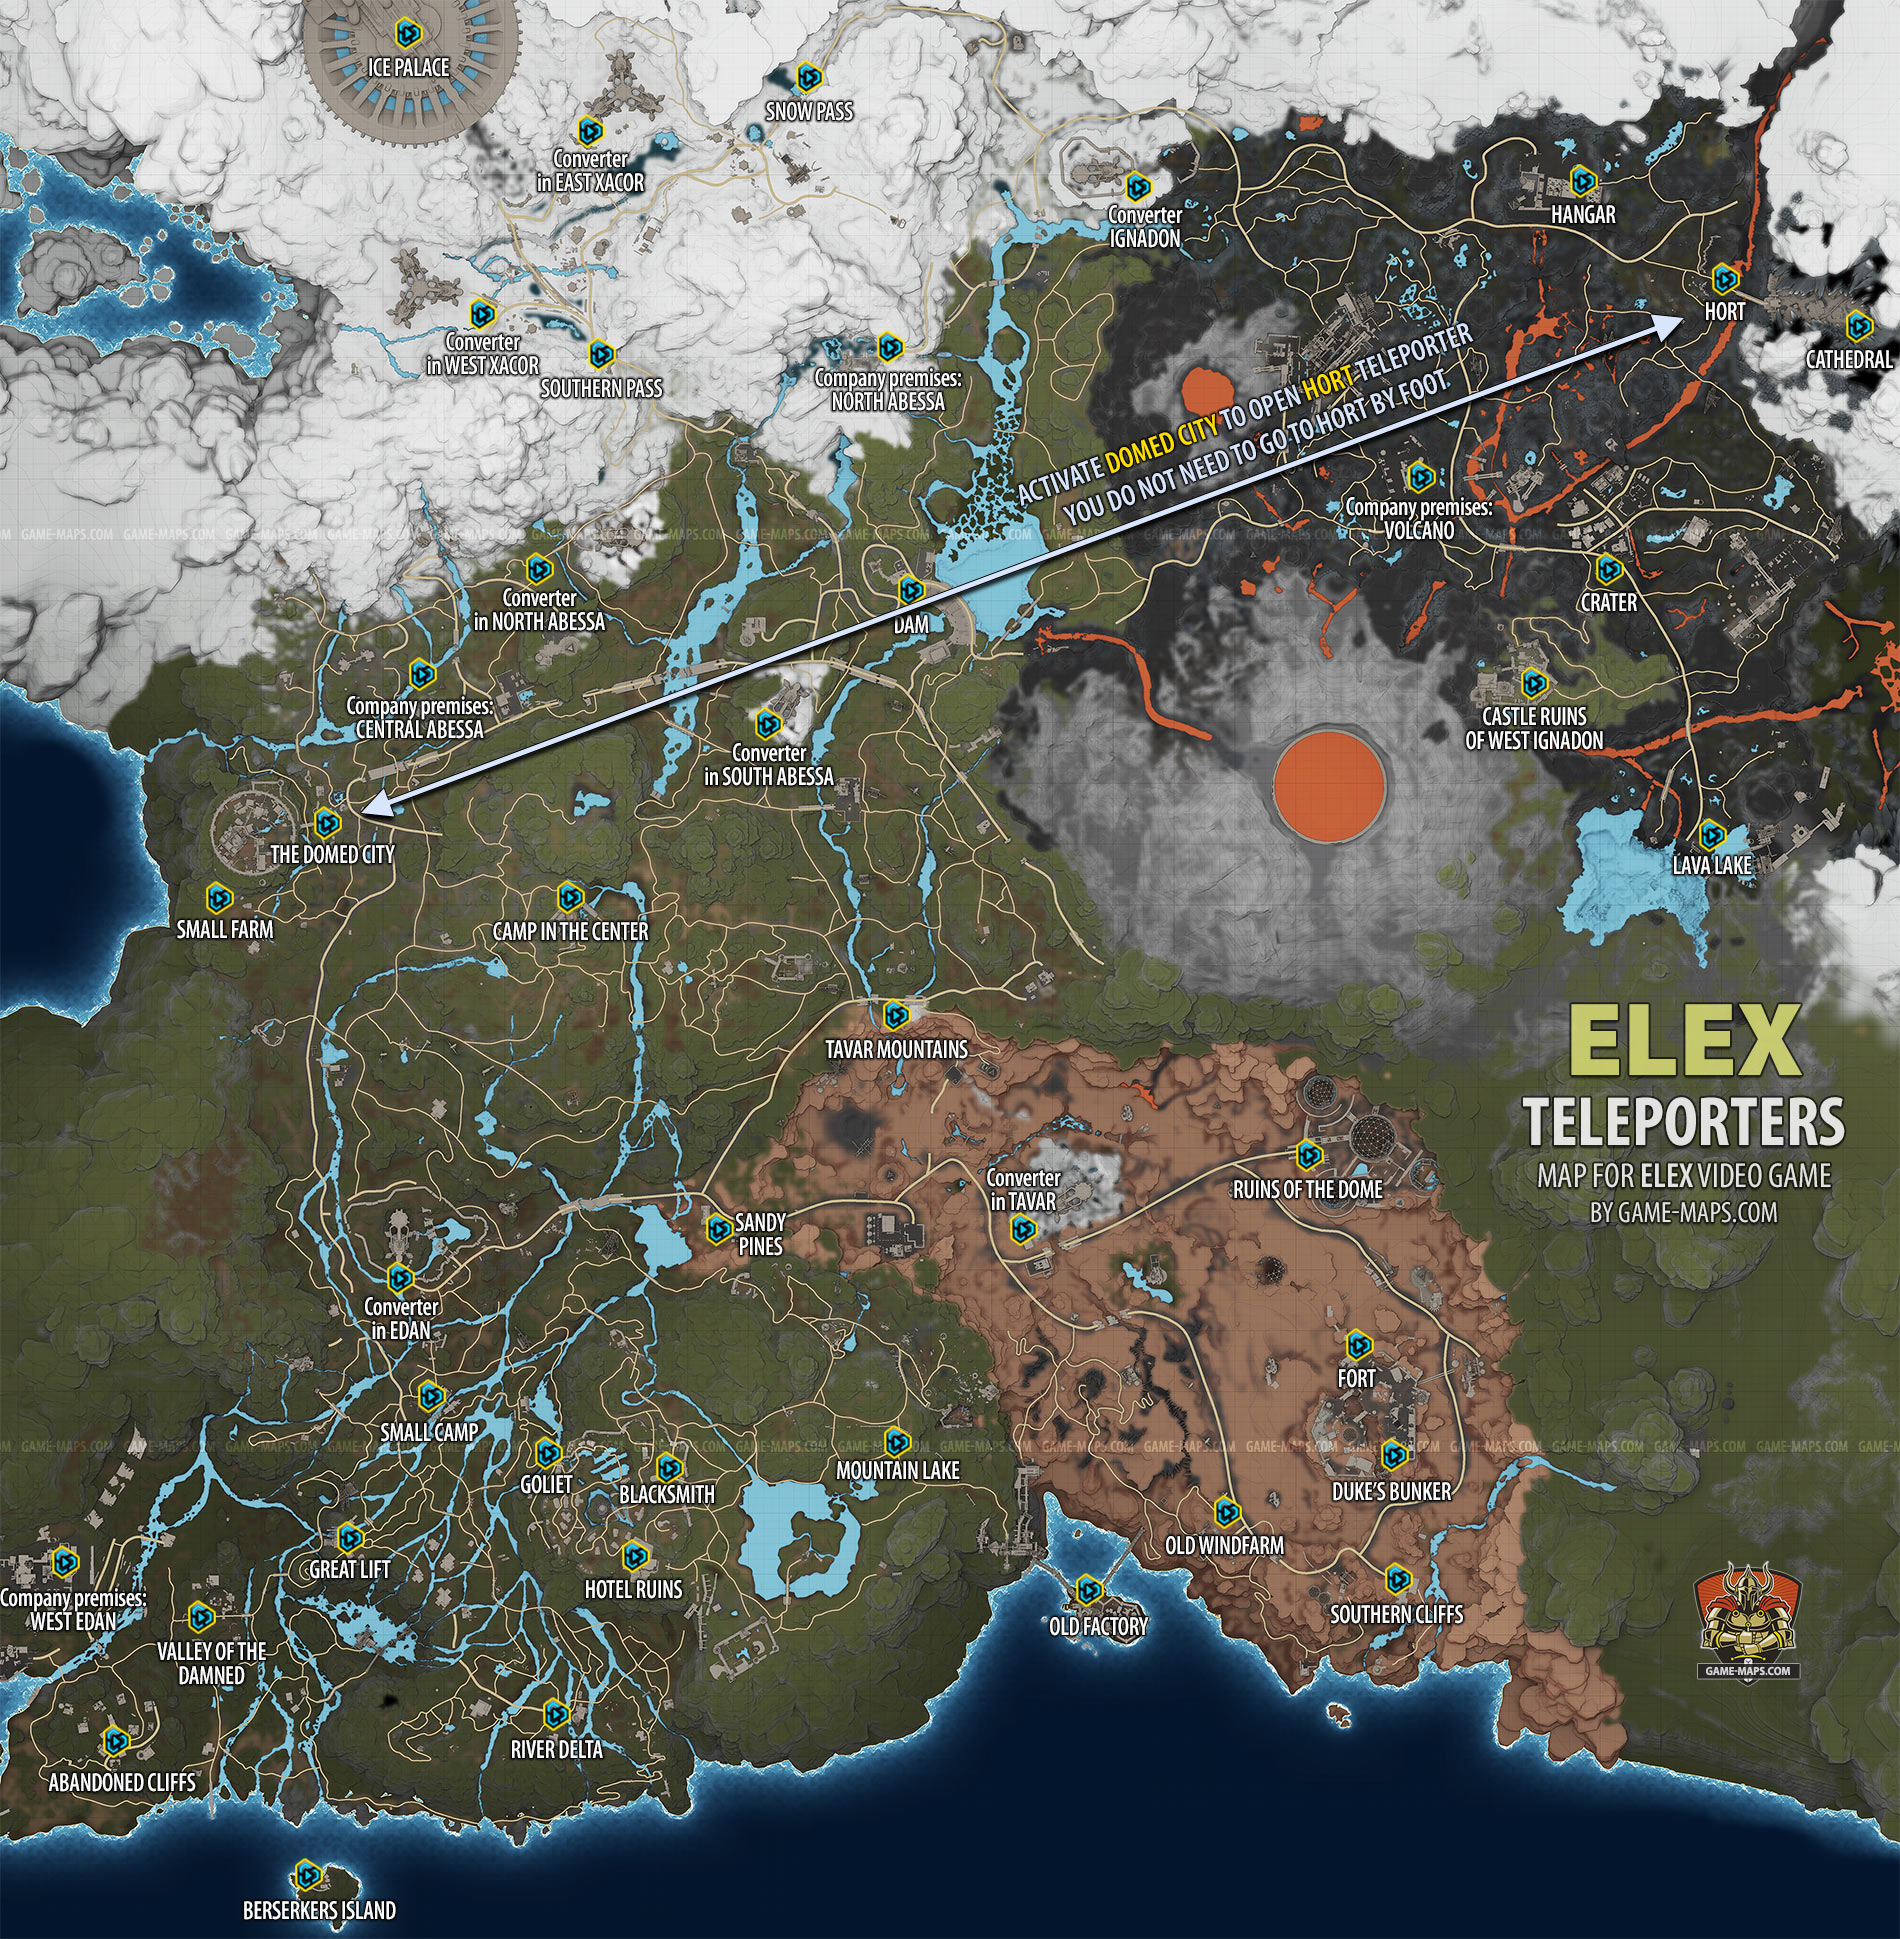 Teleporters in ELEX Map